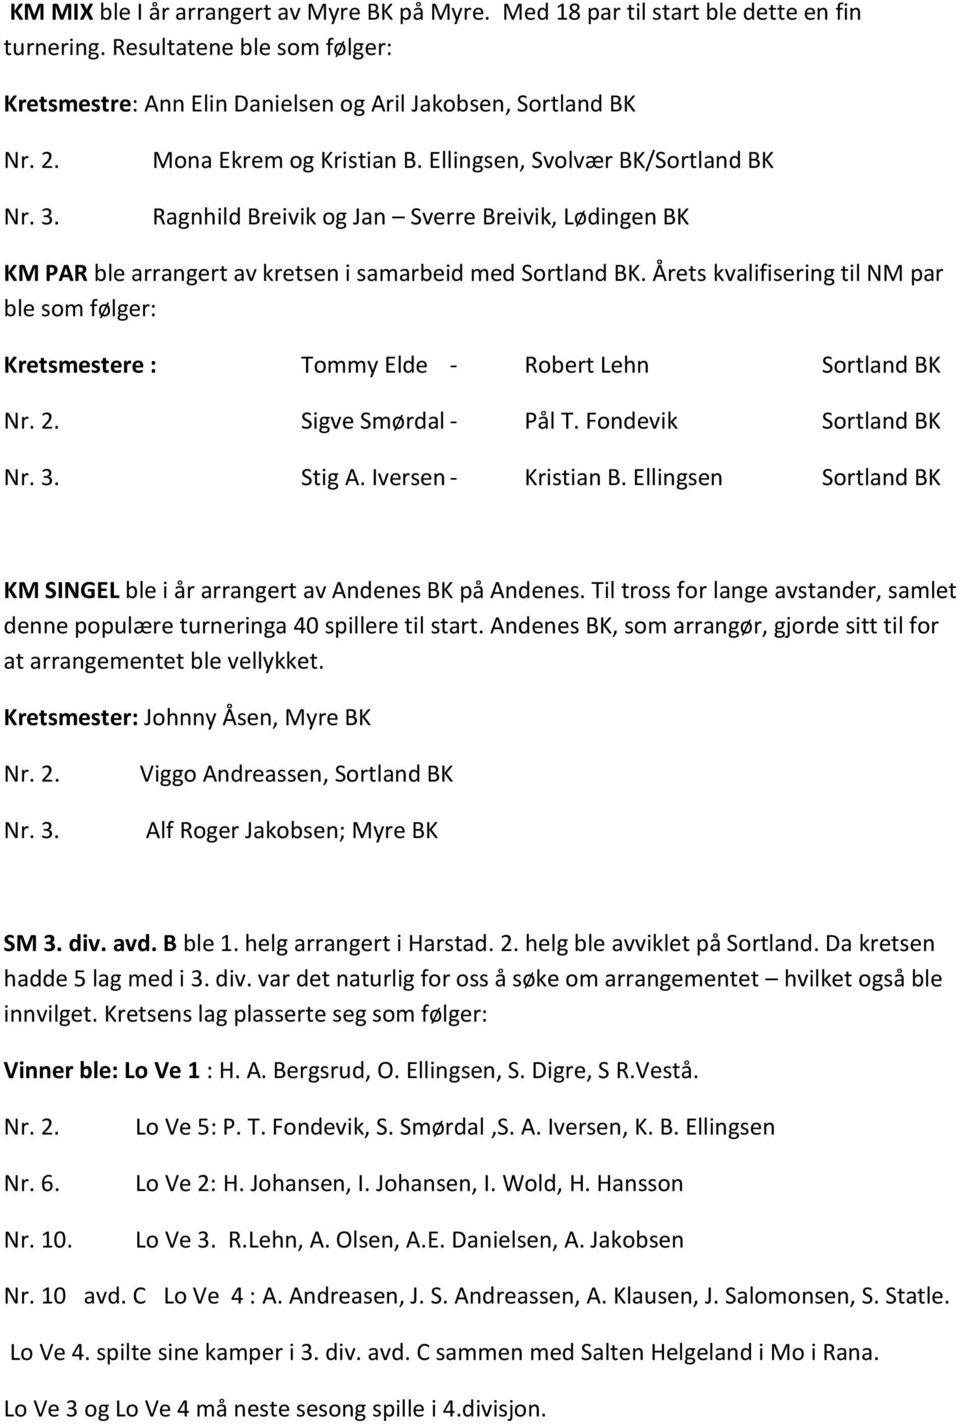 Årets kvalifisering til NM par ble som følger: Kretsmestere : Tommy Elde - Robert Lehn Sortland BK Nr. 2. Sigve Smørdal - Pål T. Fondevik Sortland BK Nr. 3. Stig A. Iversen - Kristian B.